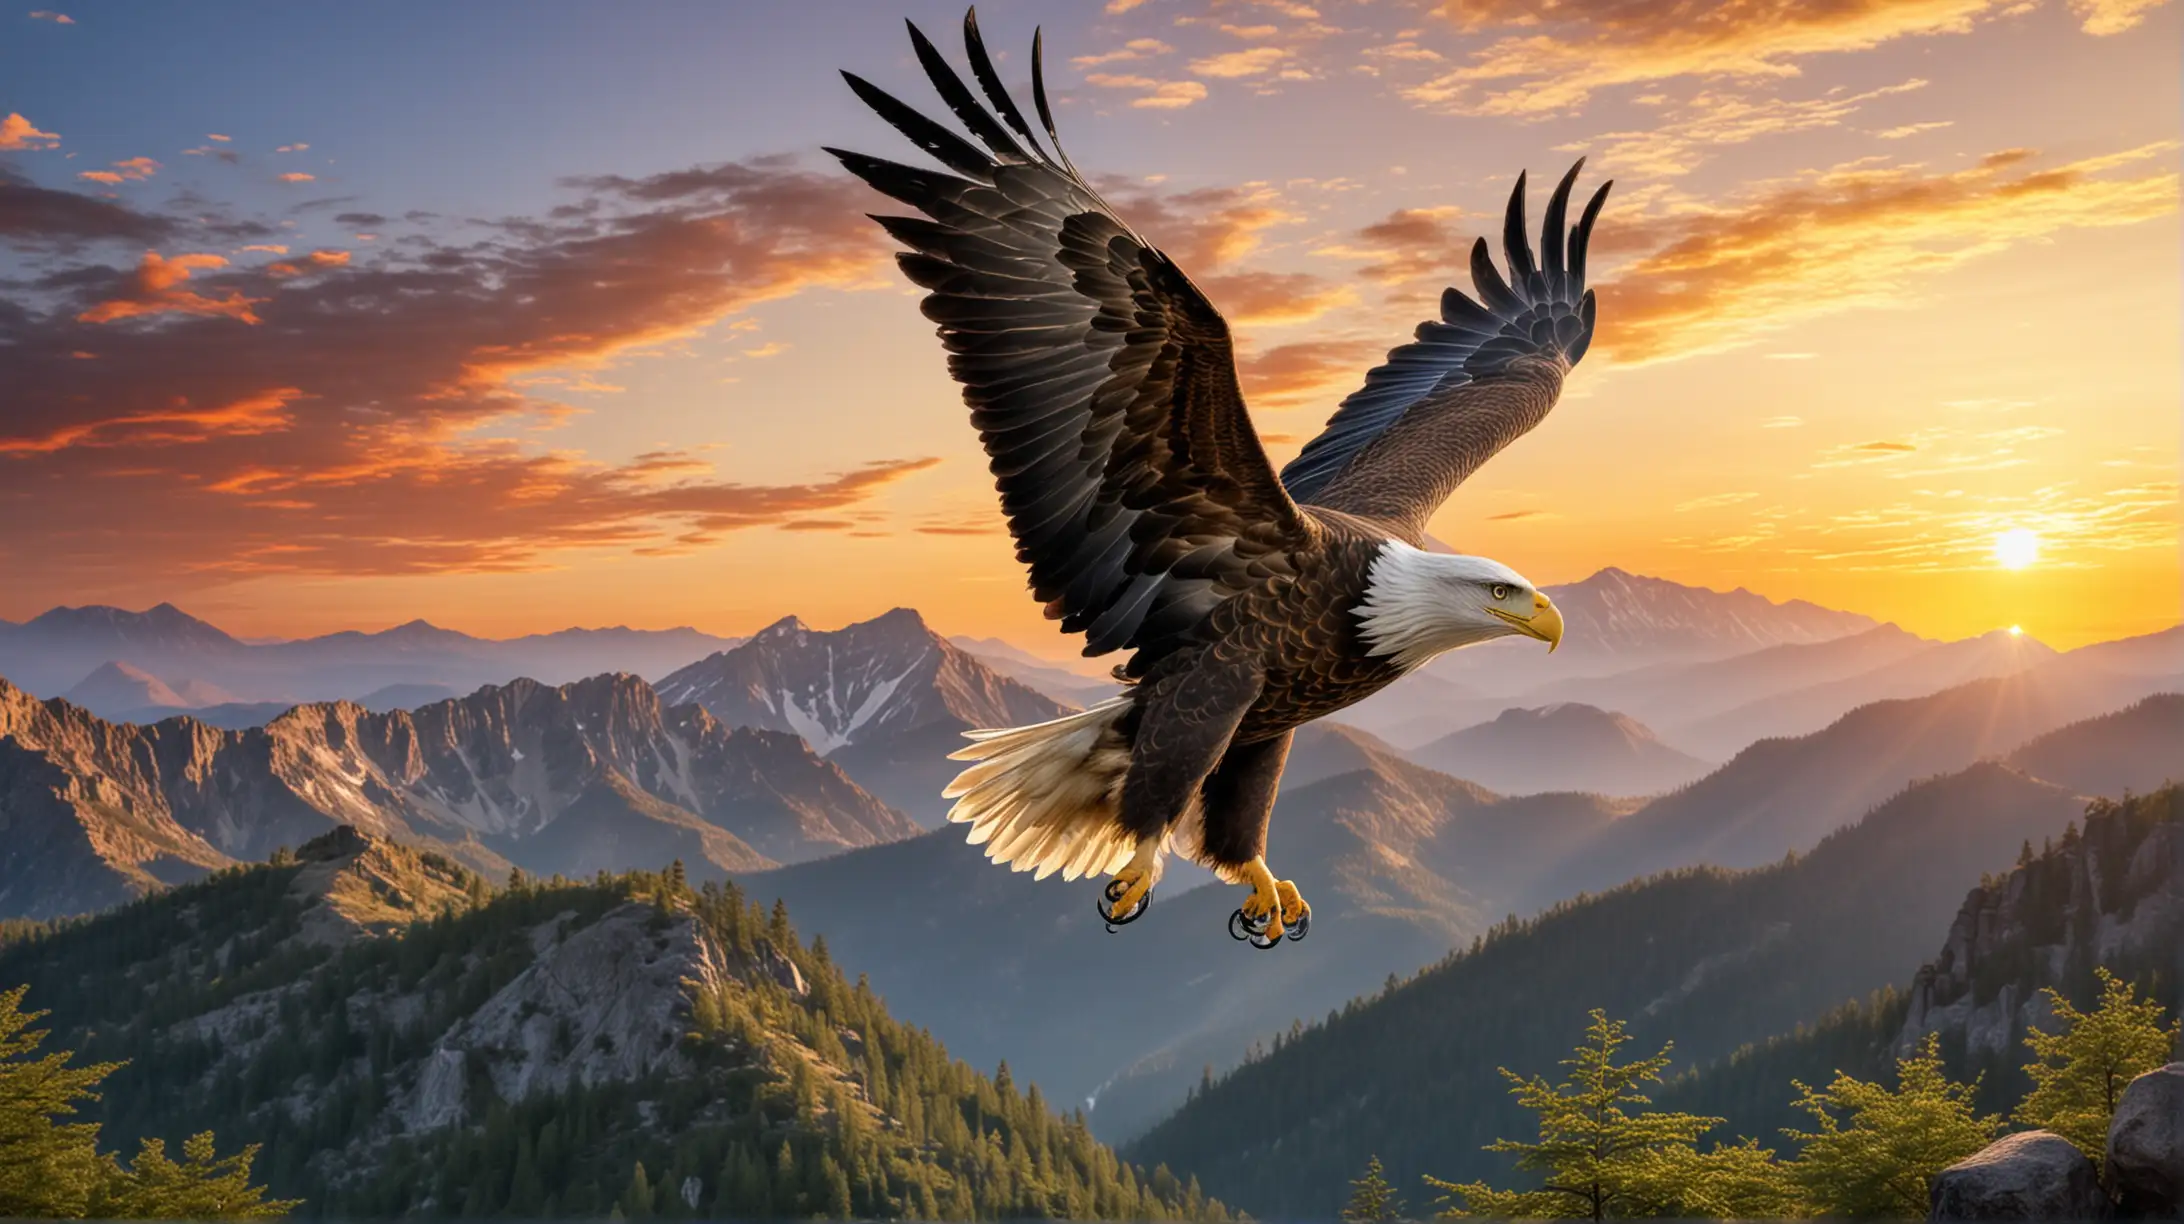 Majestic Sunrise with American Eagle Soaring Over Mountainous Landscape